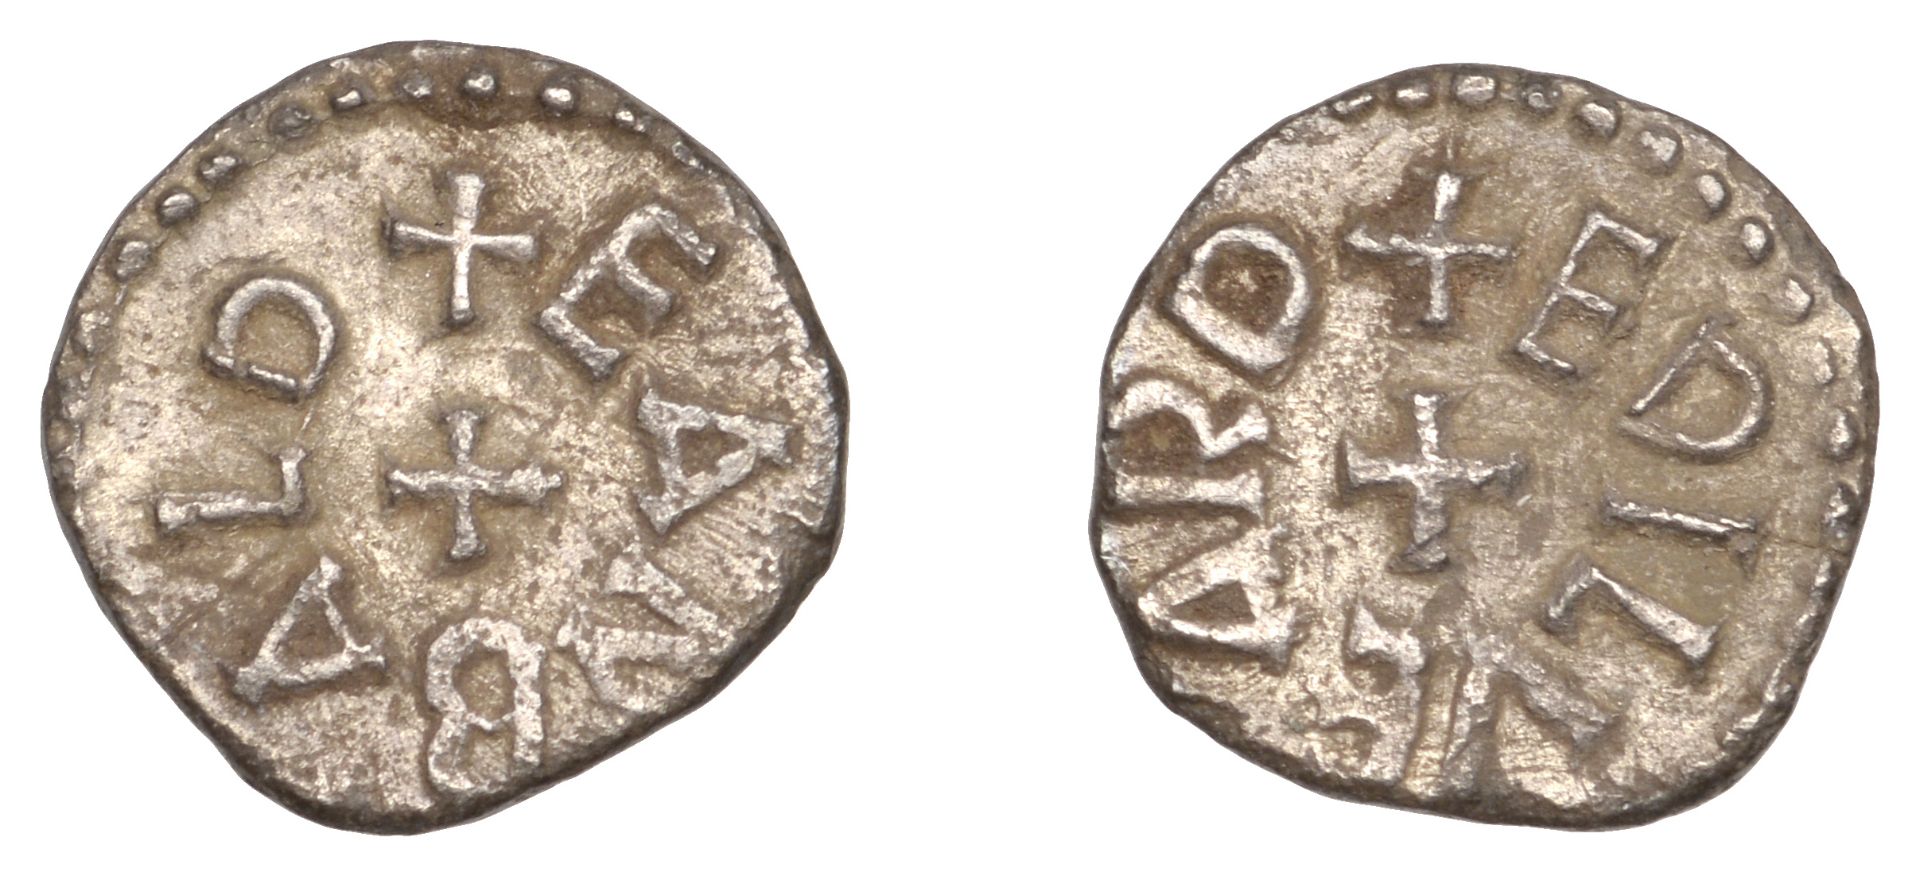 Archbishops of York, Eanbald II (796-835), base Sceatta or Penny, Phase I, Ã†thilweard, eanba...